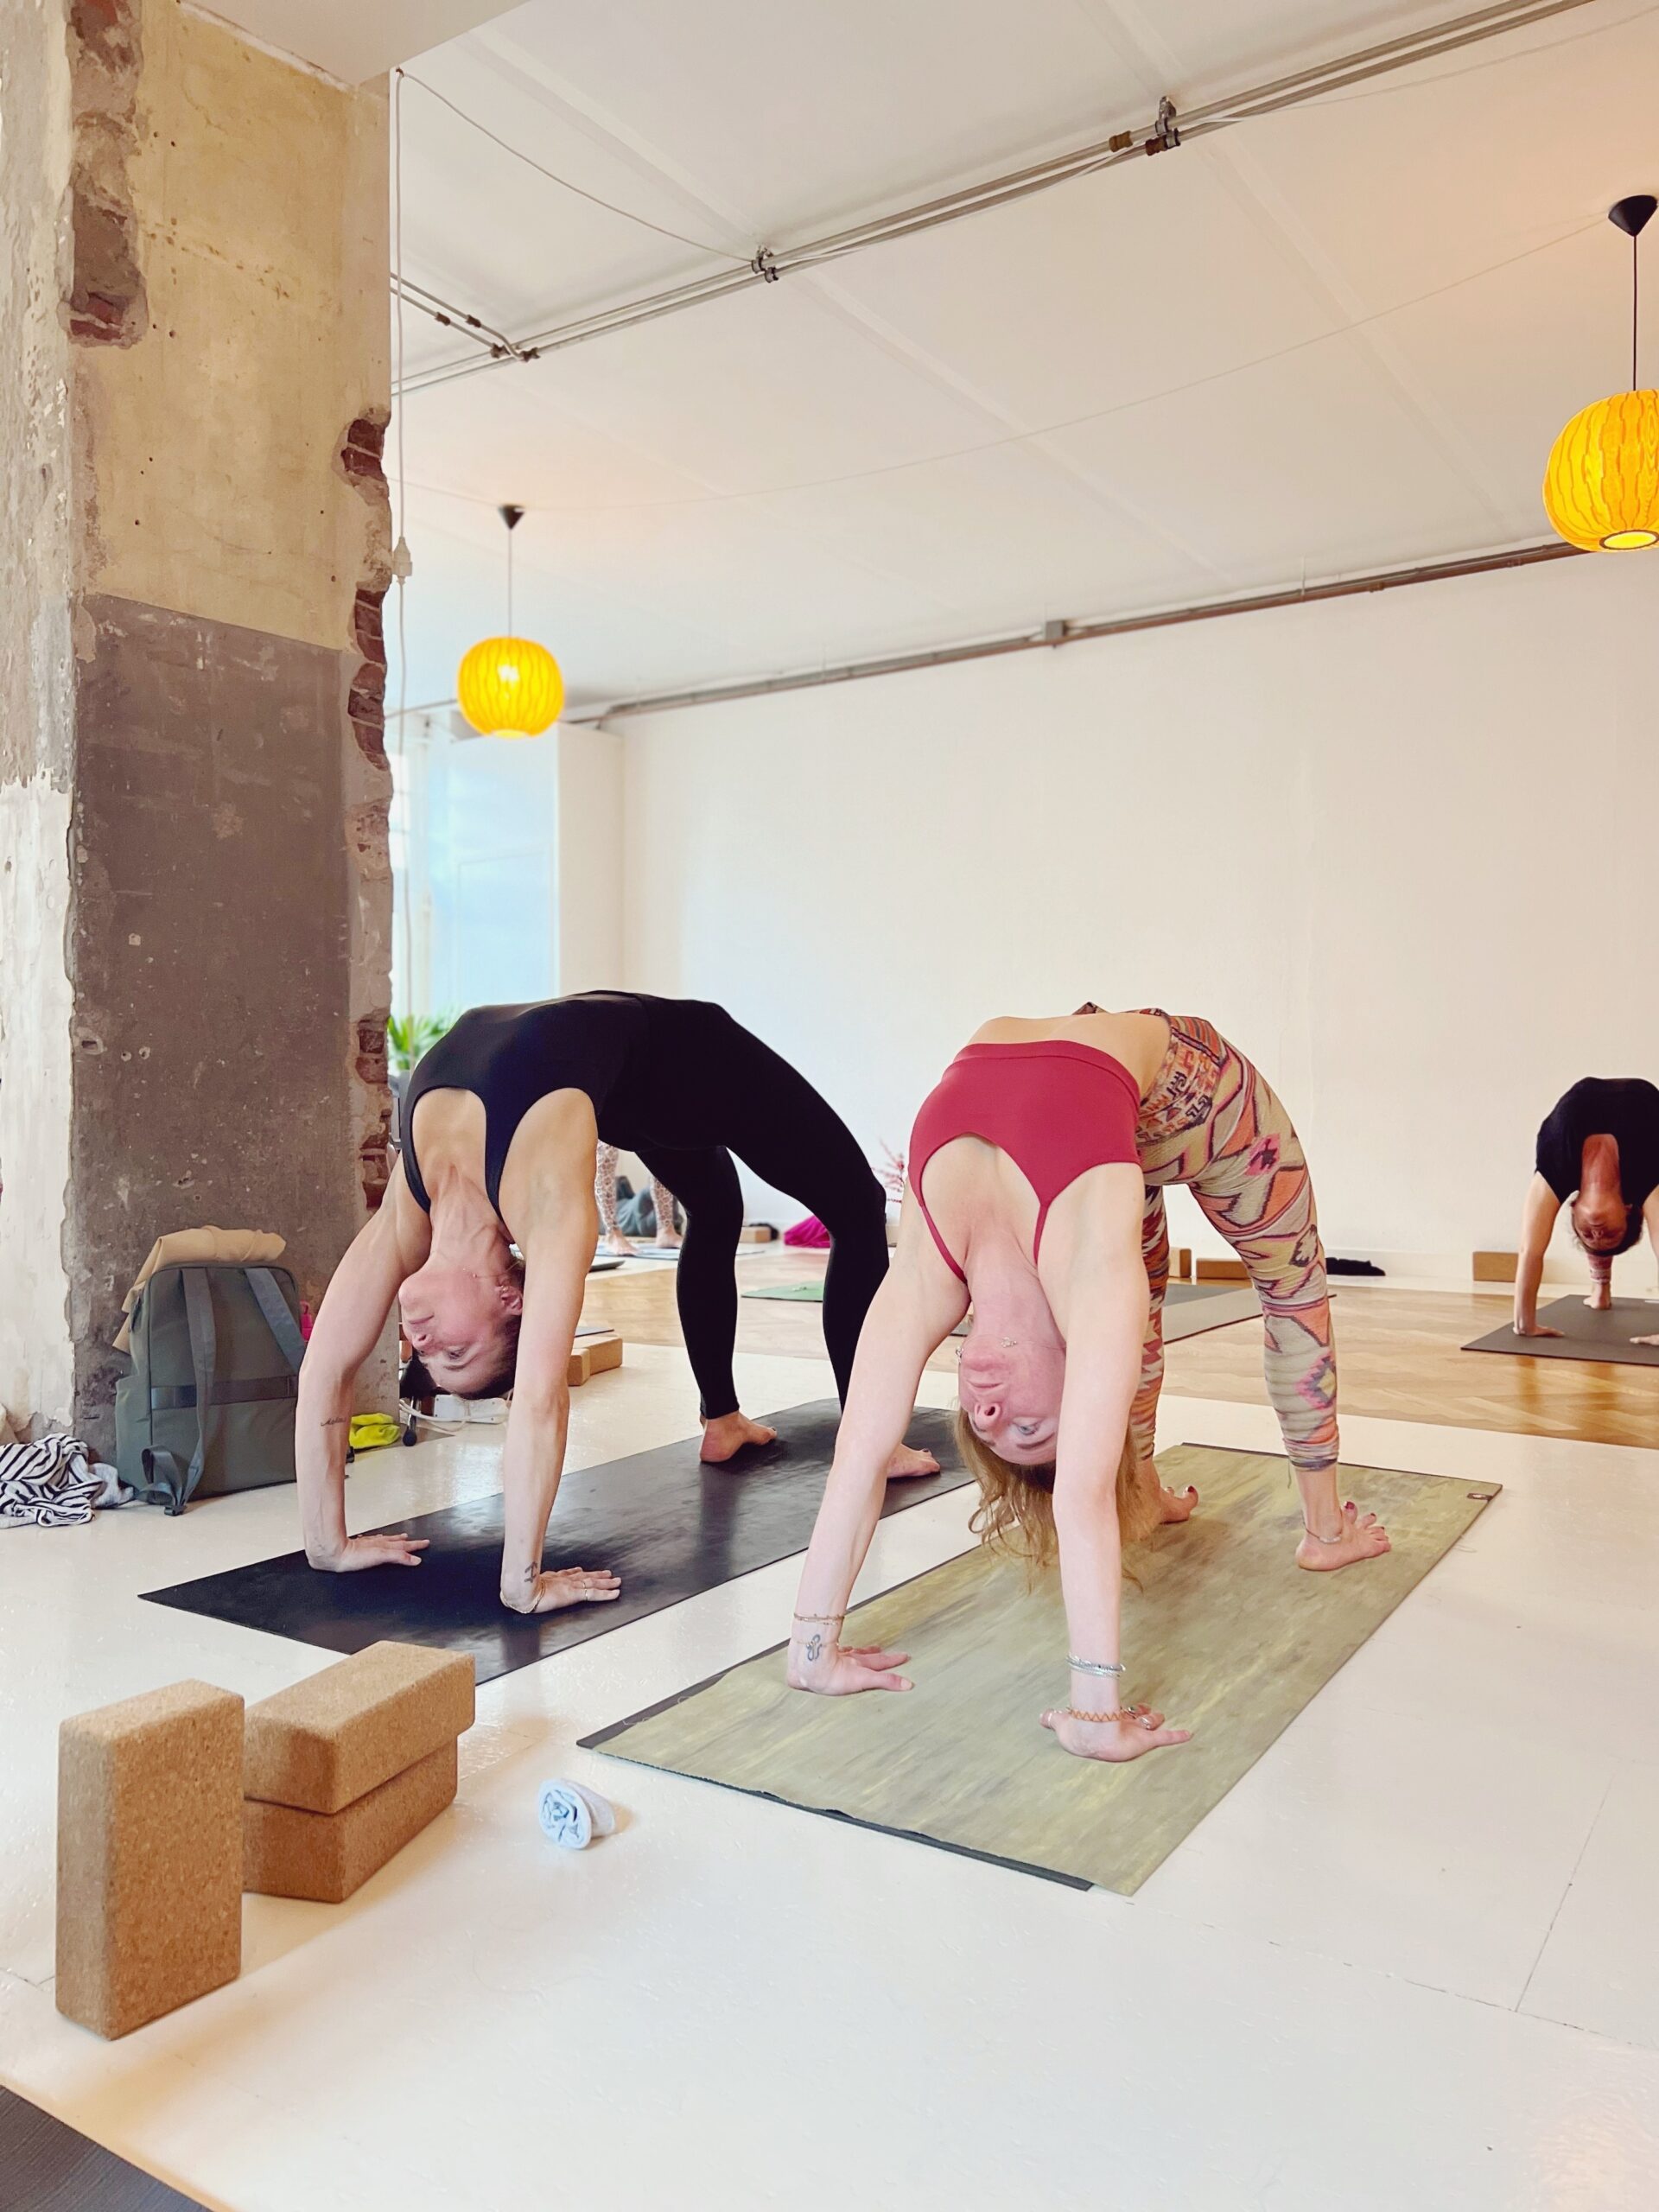 200-hour Part Time Vinyasa & Yin Yoga Teacher Training with Iris